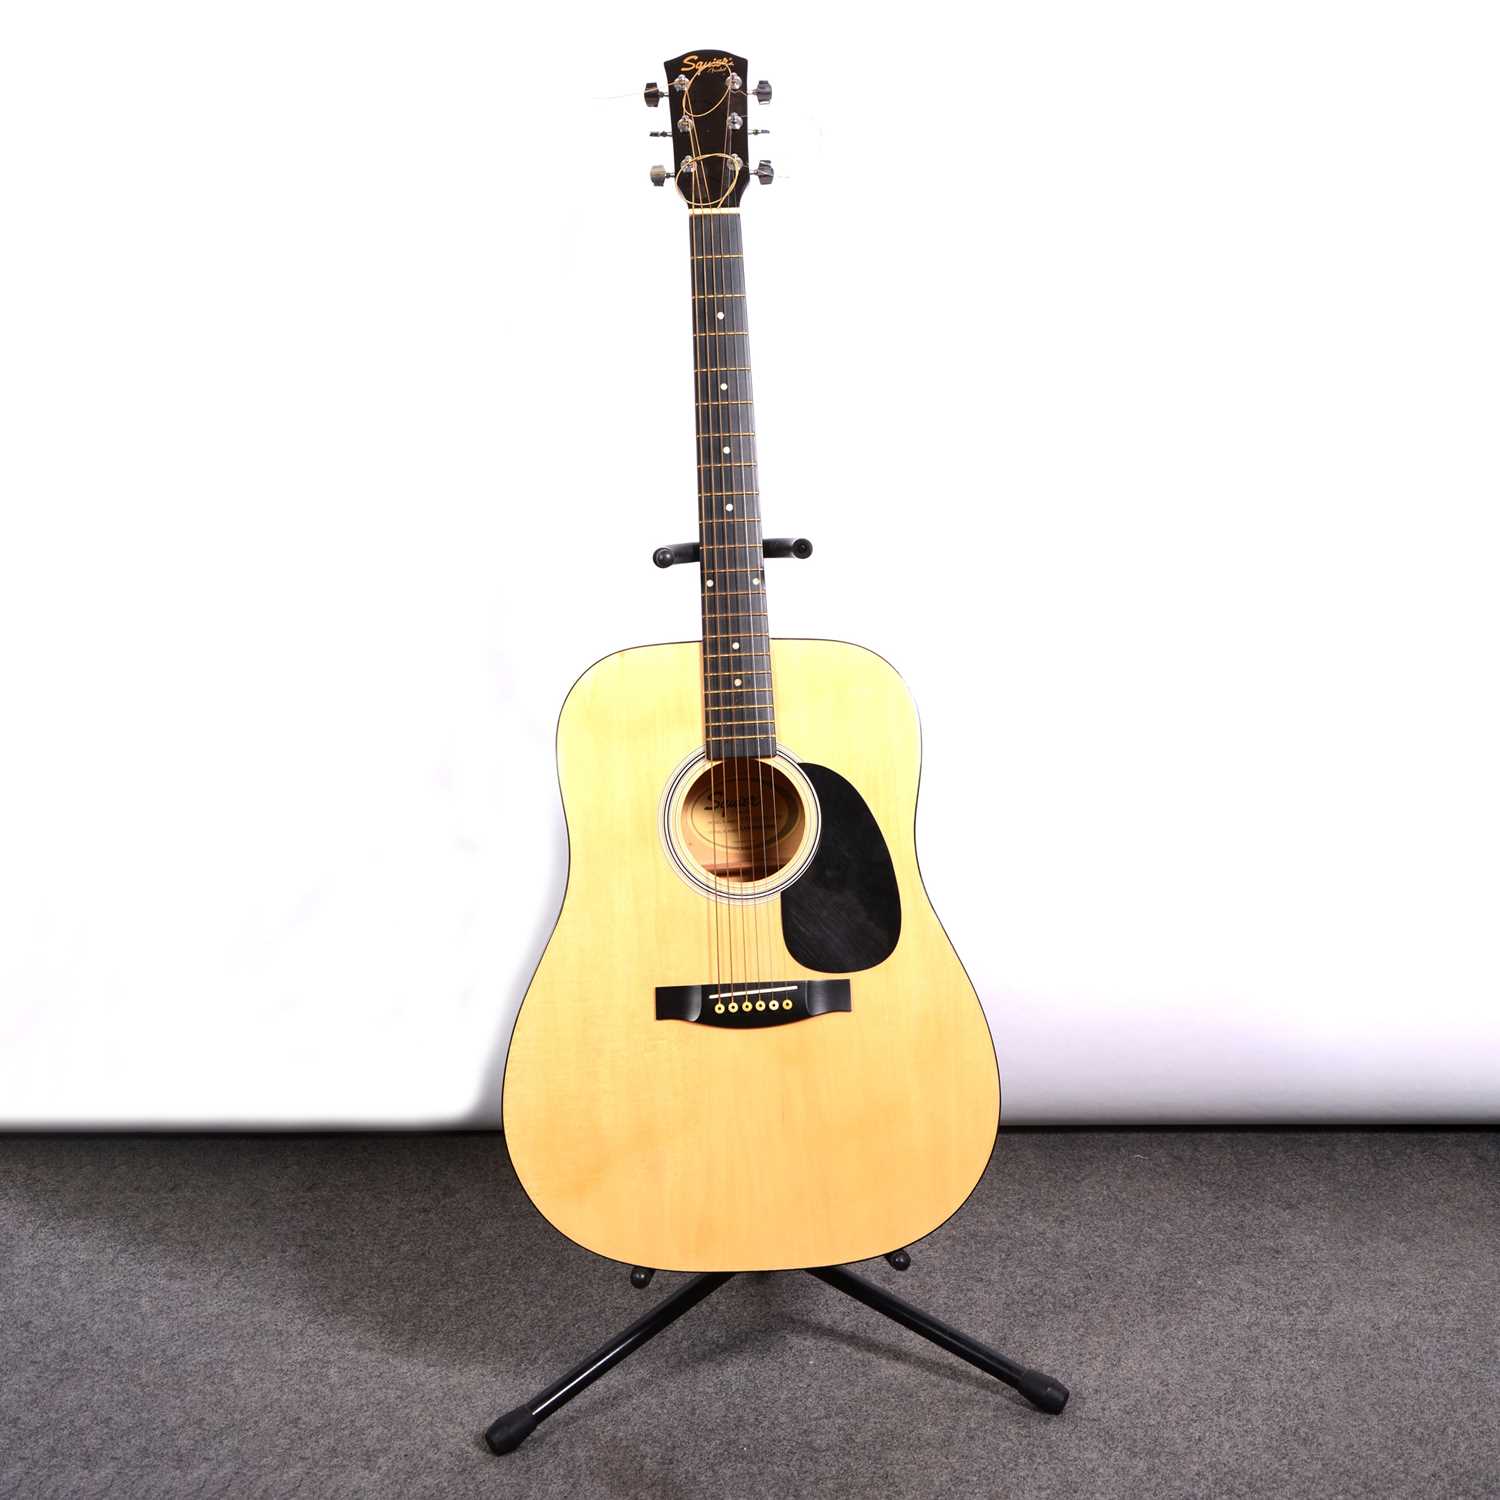 Lot 155 - Fender Squier acoustic guitar, model number 093-0300-949